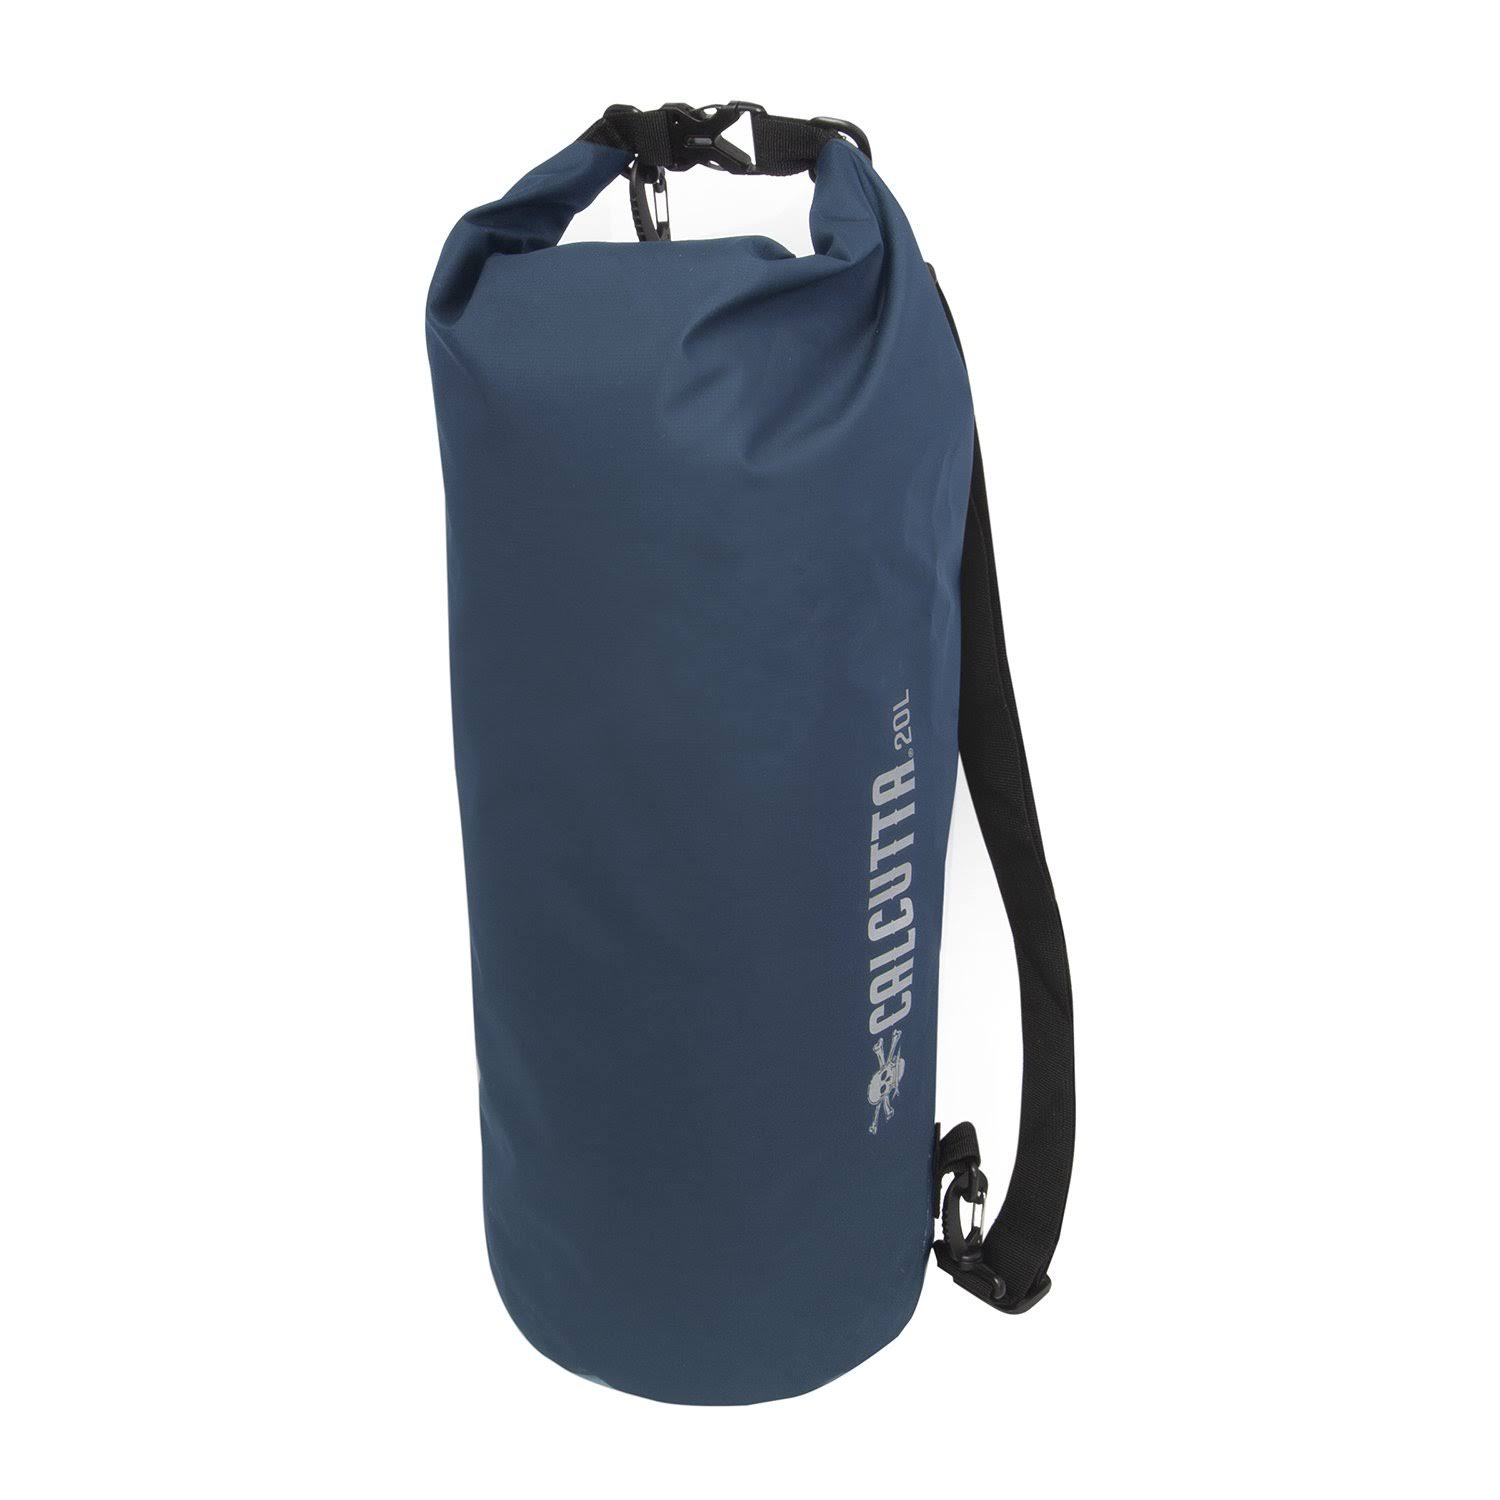 Calcutta Waterproof Dry Bag - 20 Liter